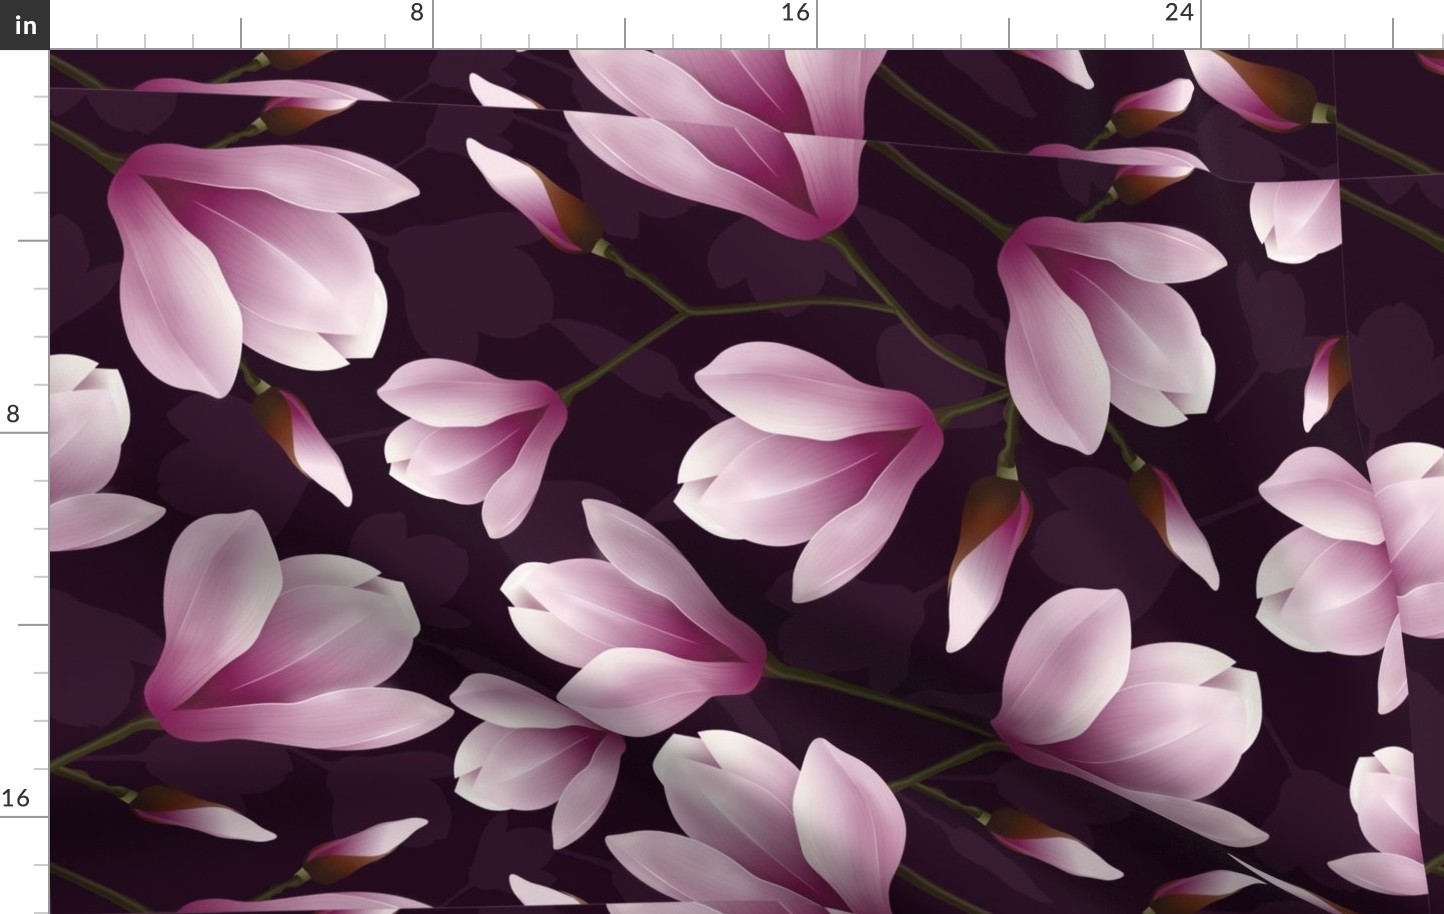 Violet botanicals magnolias - TEA TOWEL